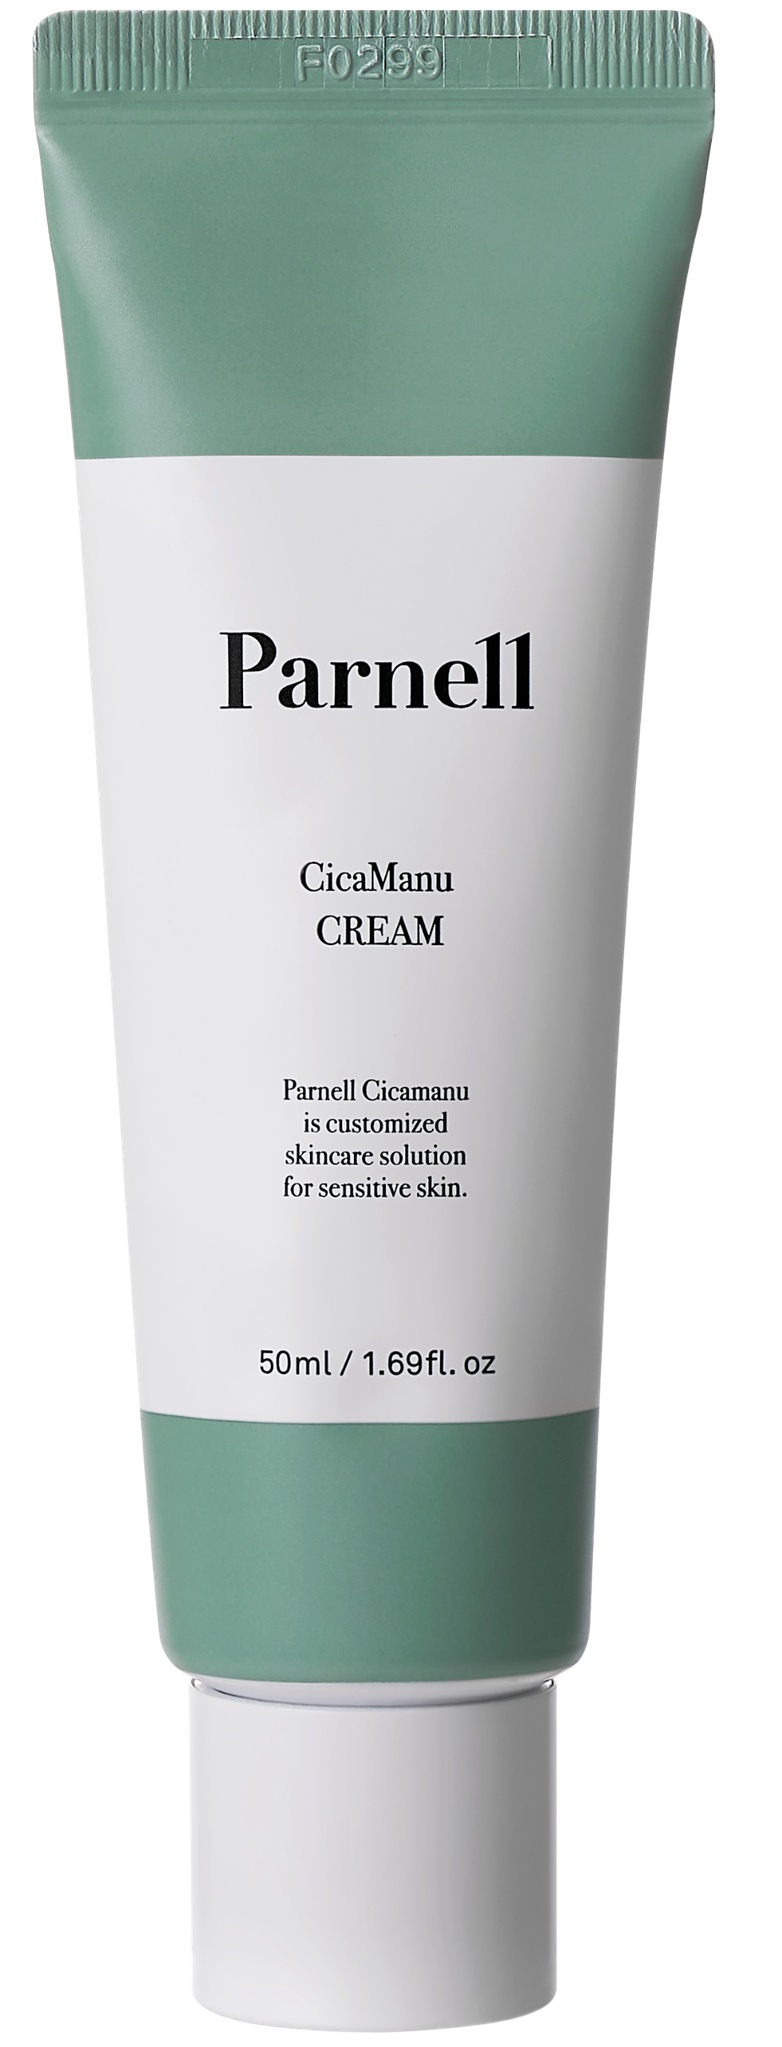 Parnell Cicamanu Cream